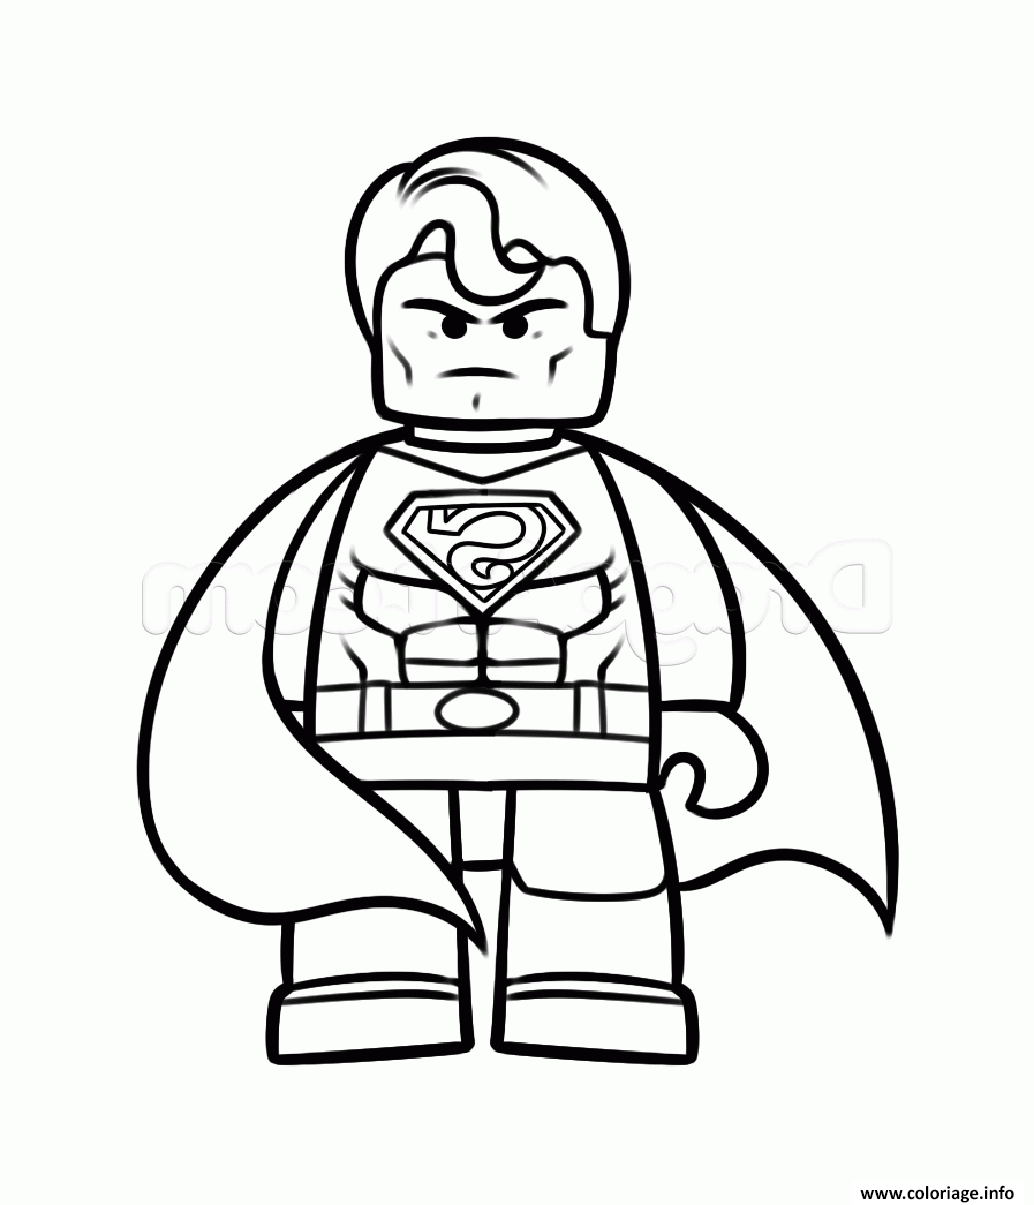 Dessin superman vs batman lego Coloriage Gratuit à Imprimer